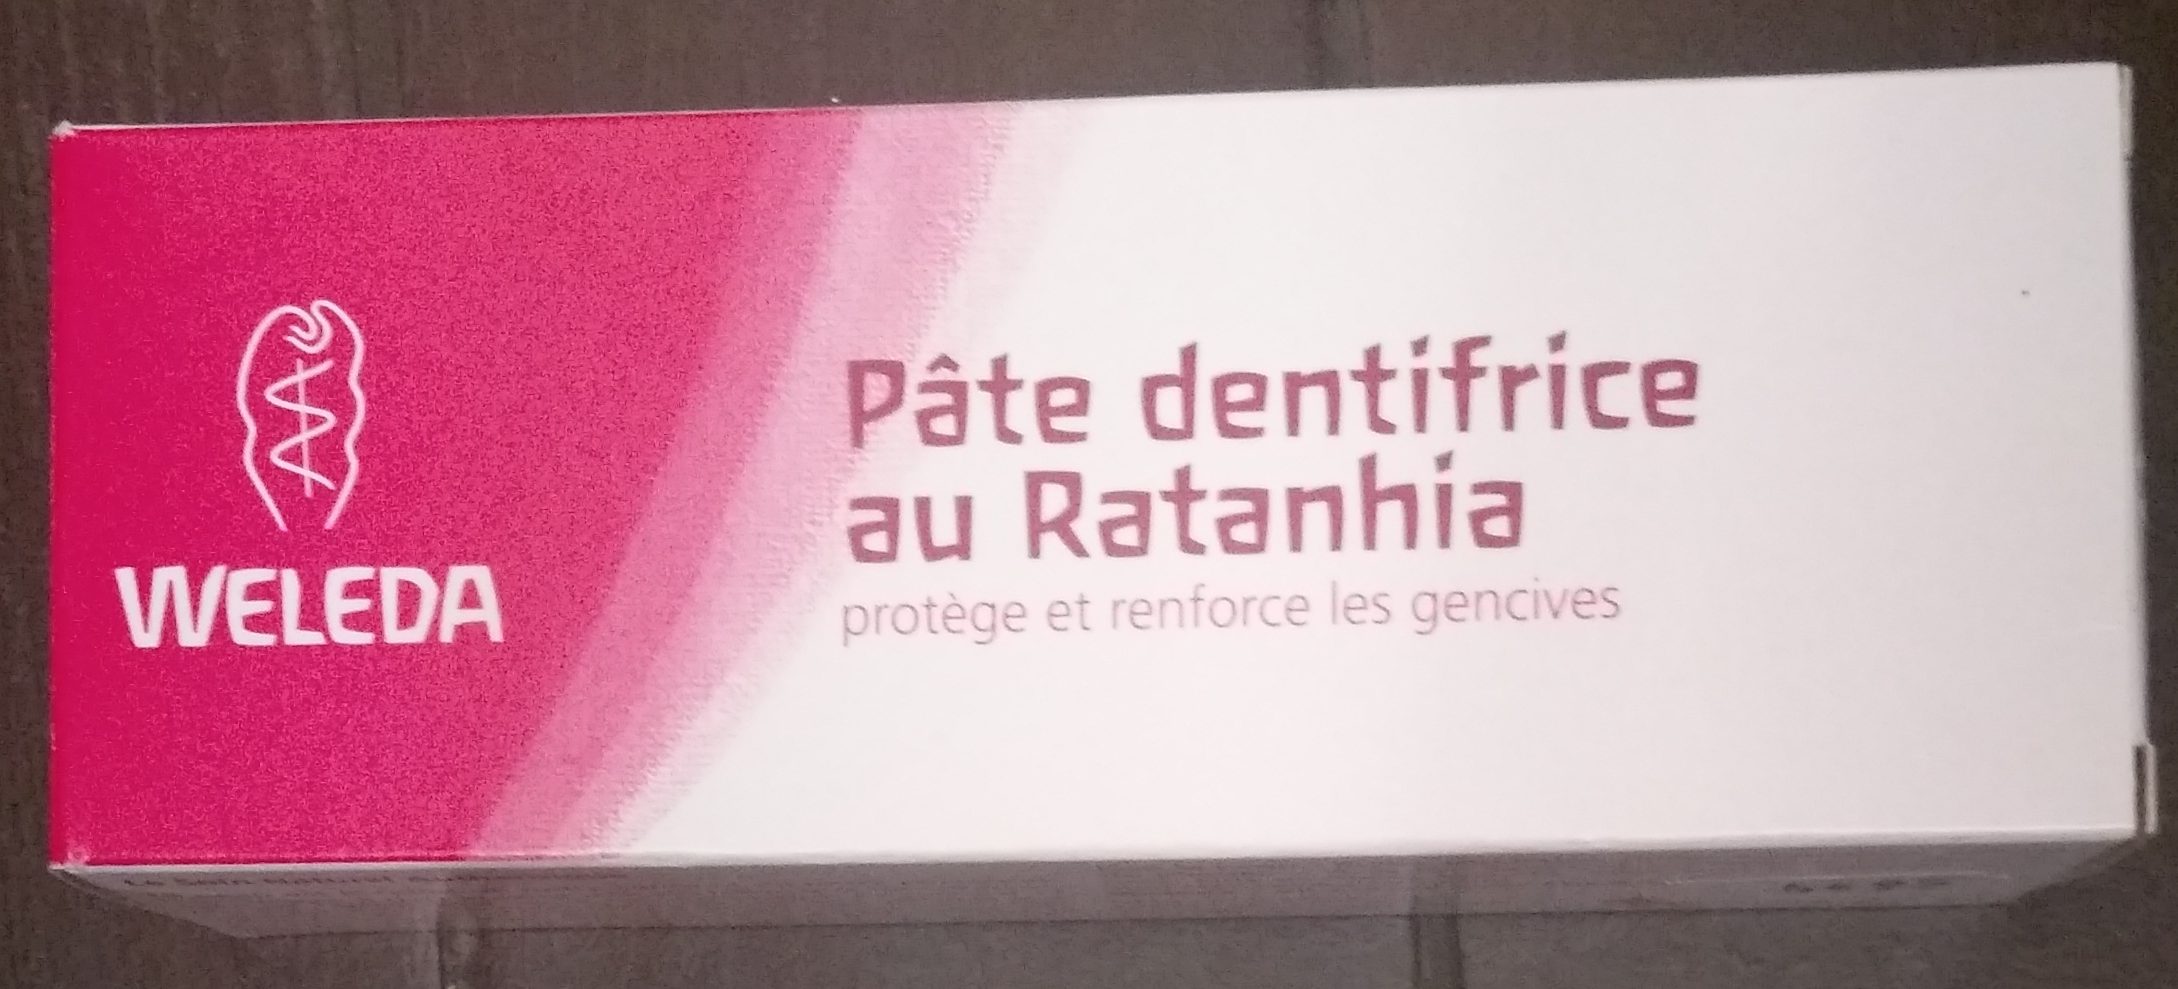 Weleda - Pâte dentifrice au Ratanhia - Product - fr